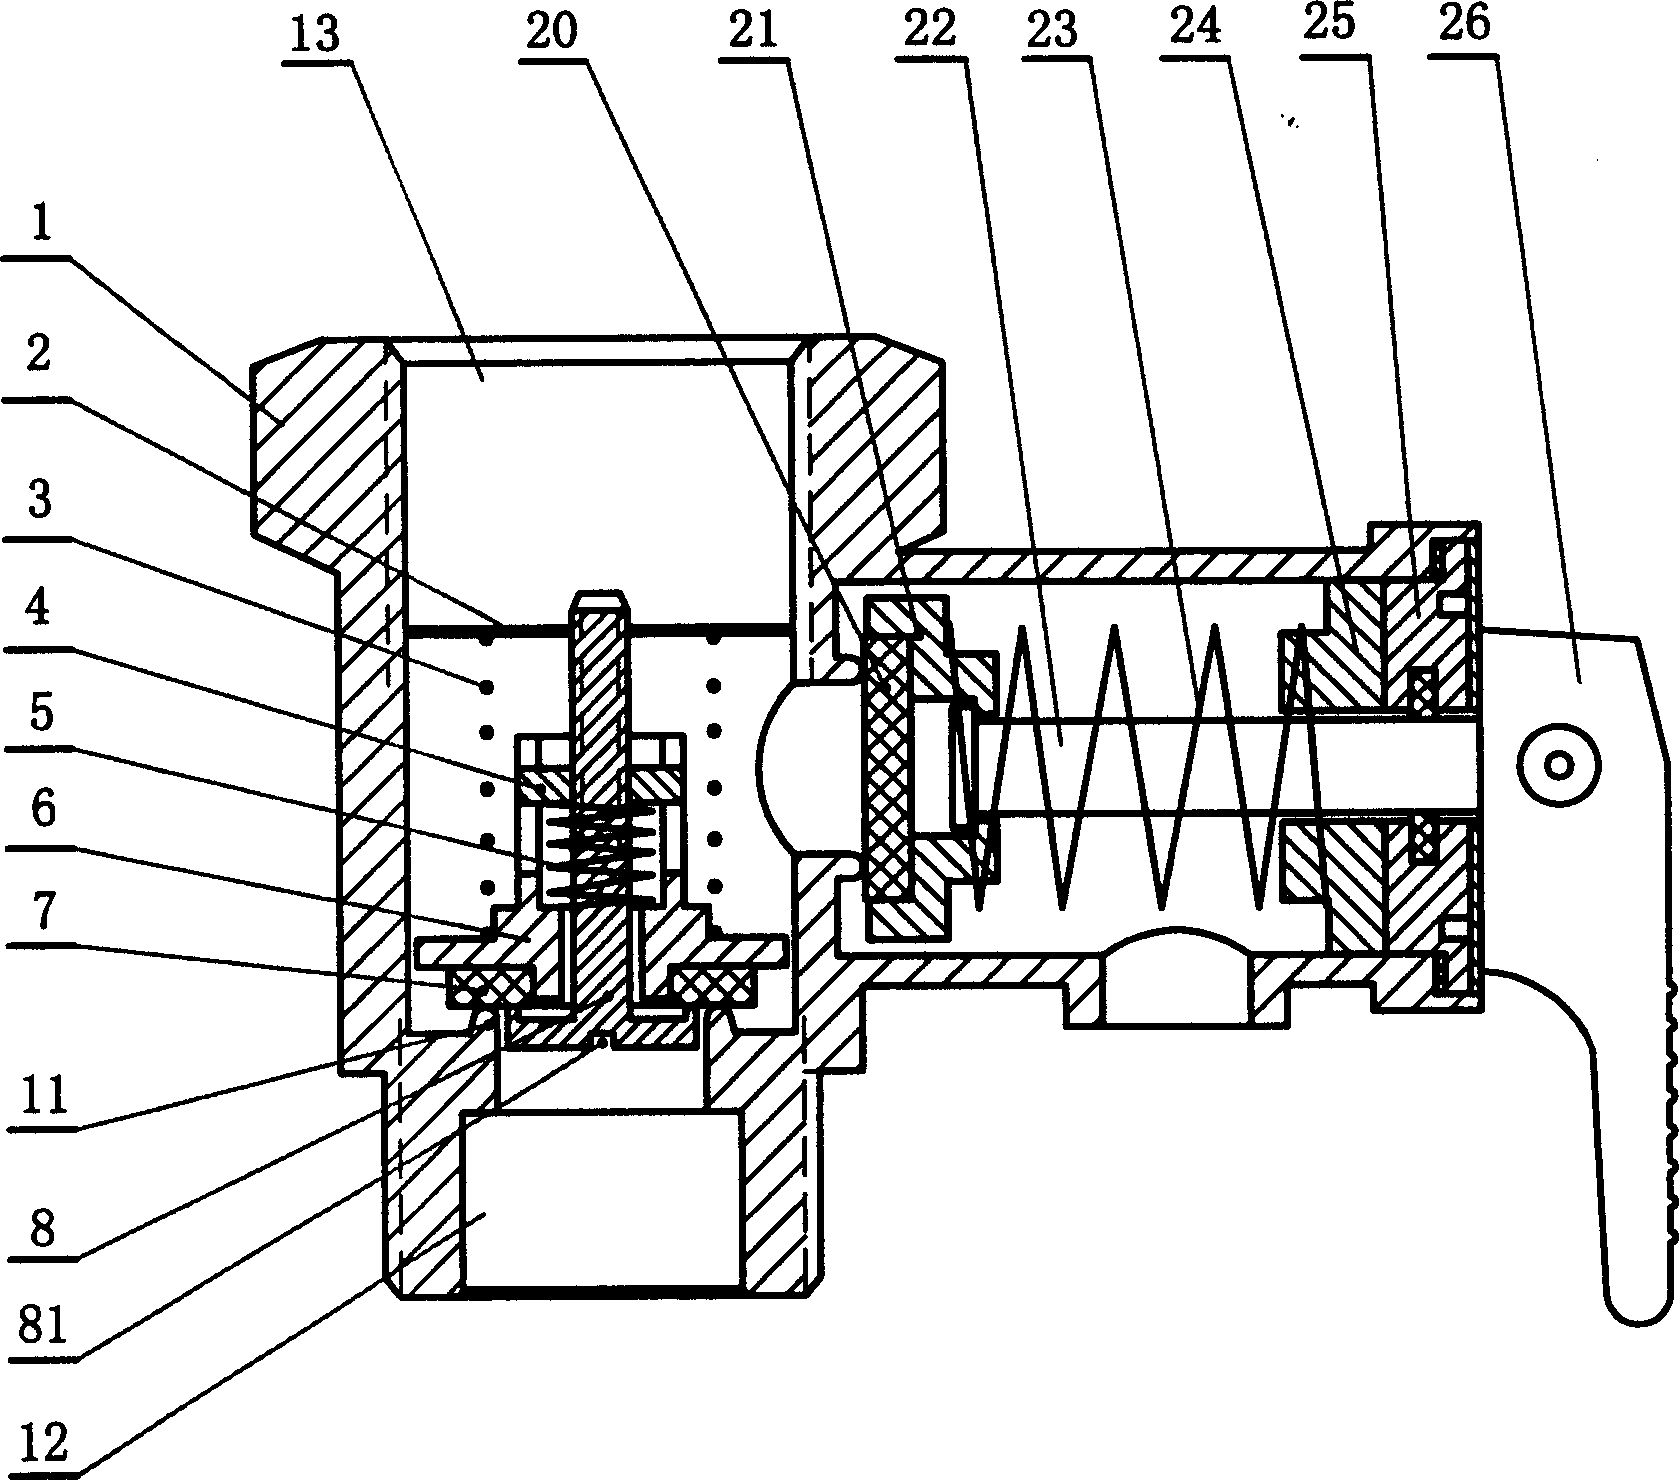 Pressure release valve in electric water heater